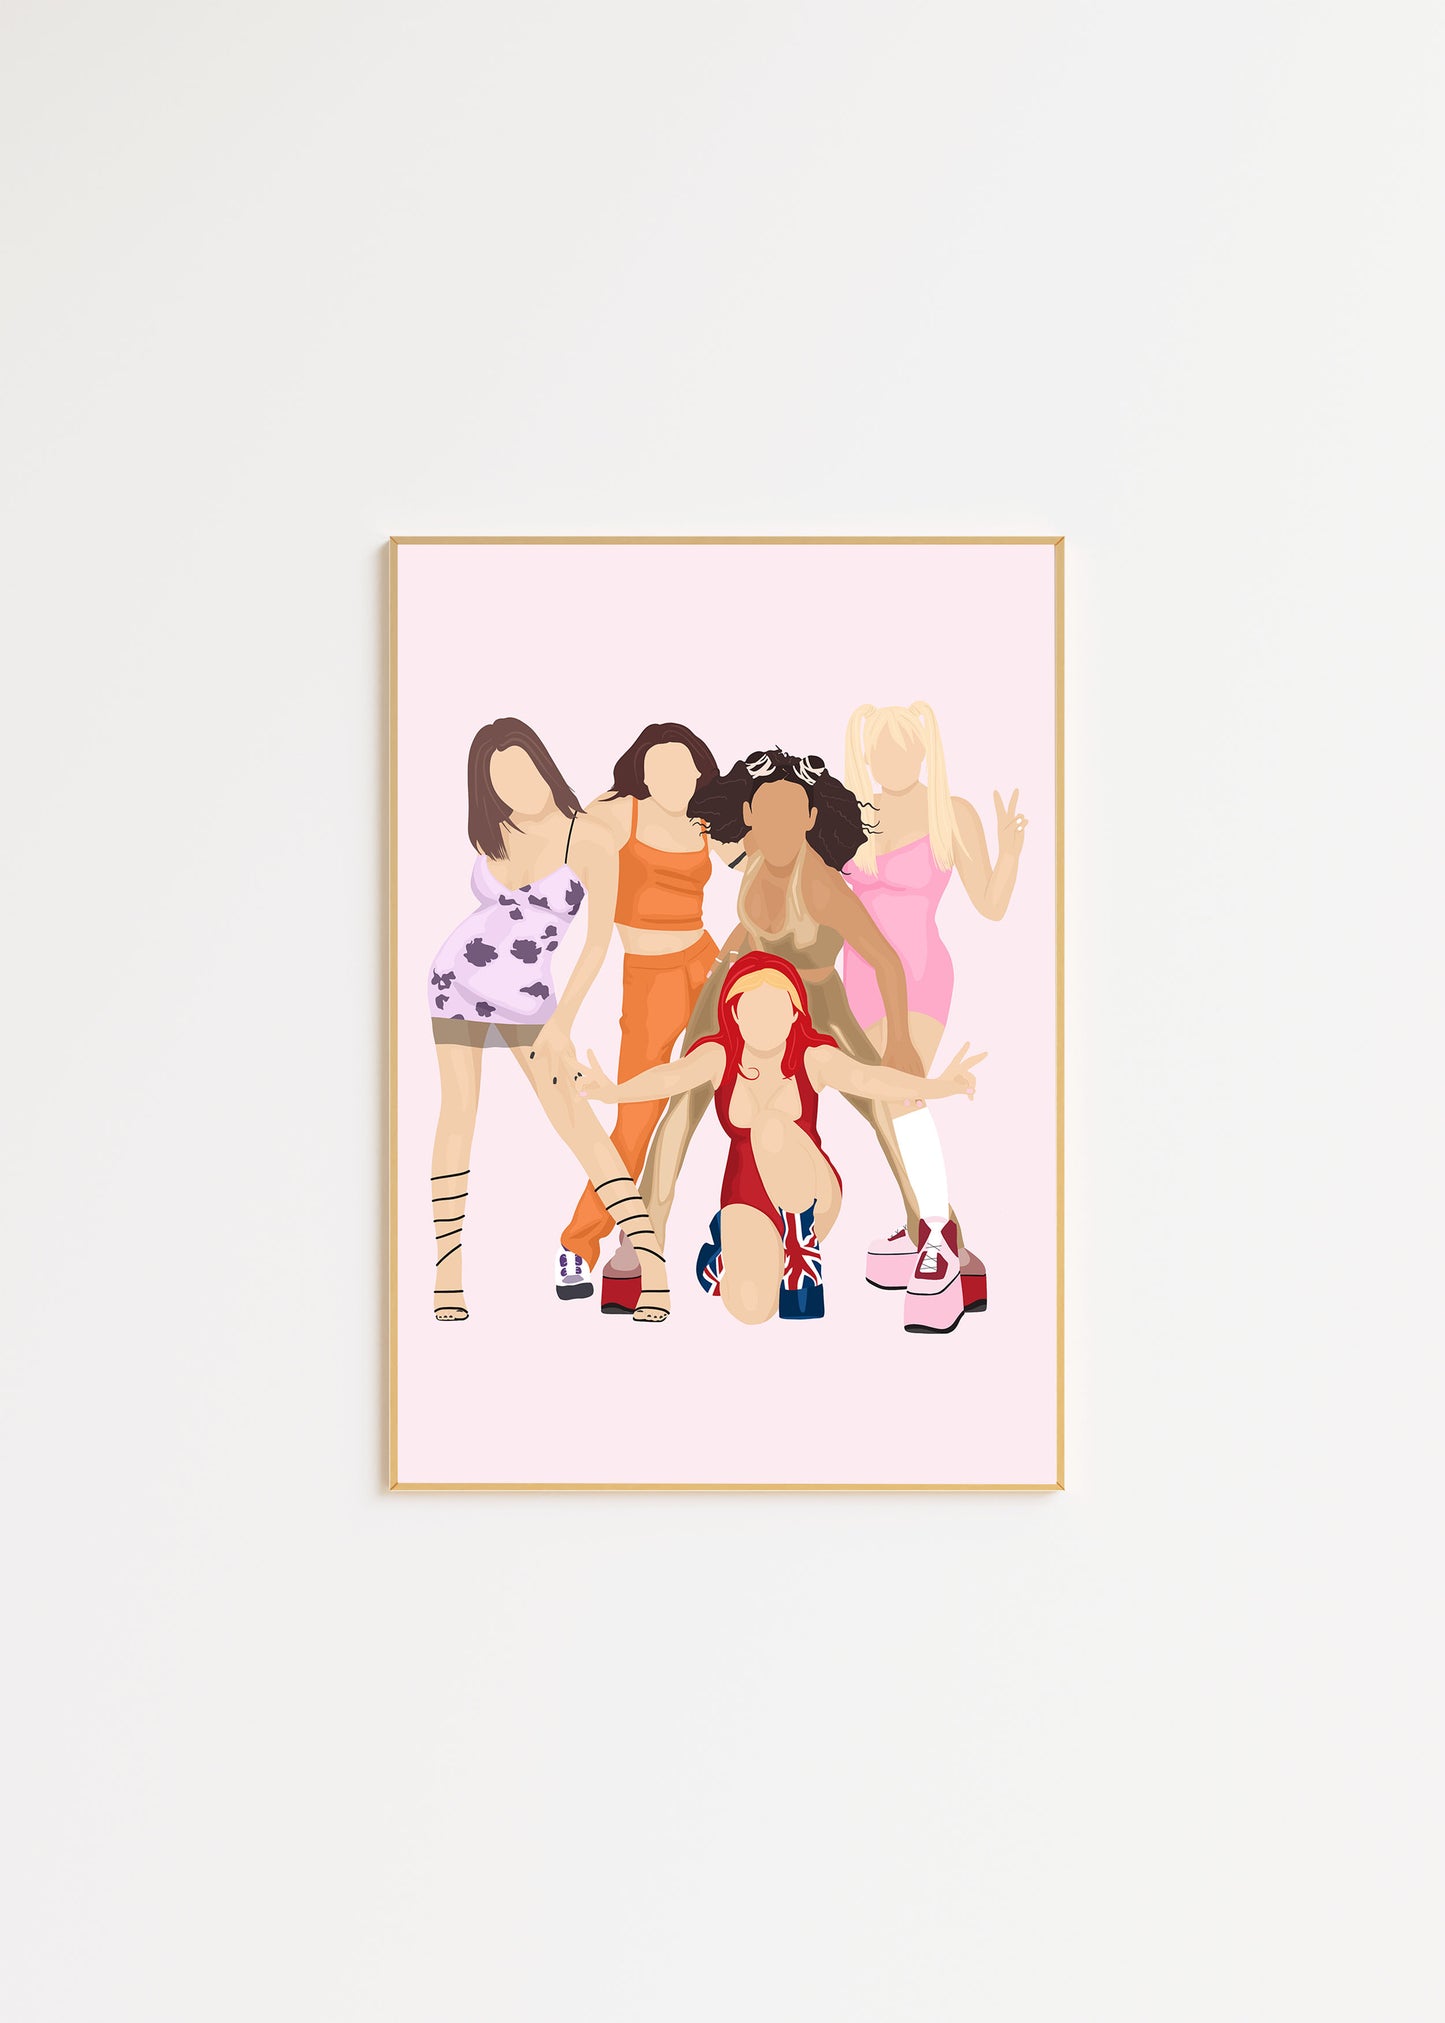 Spice Girls Inspired Wall Art Print